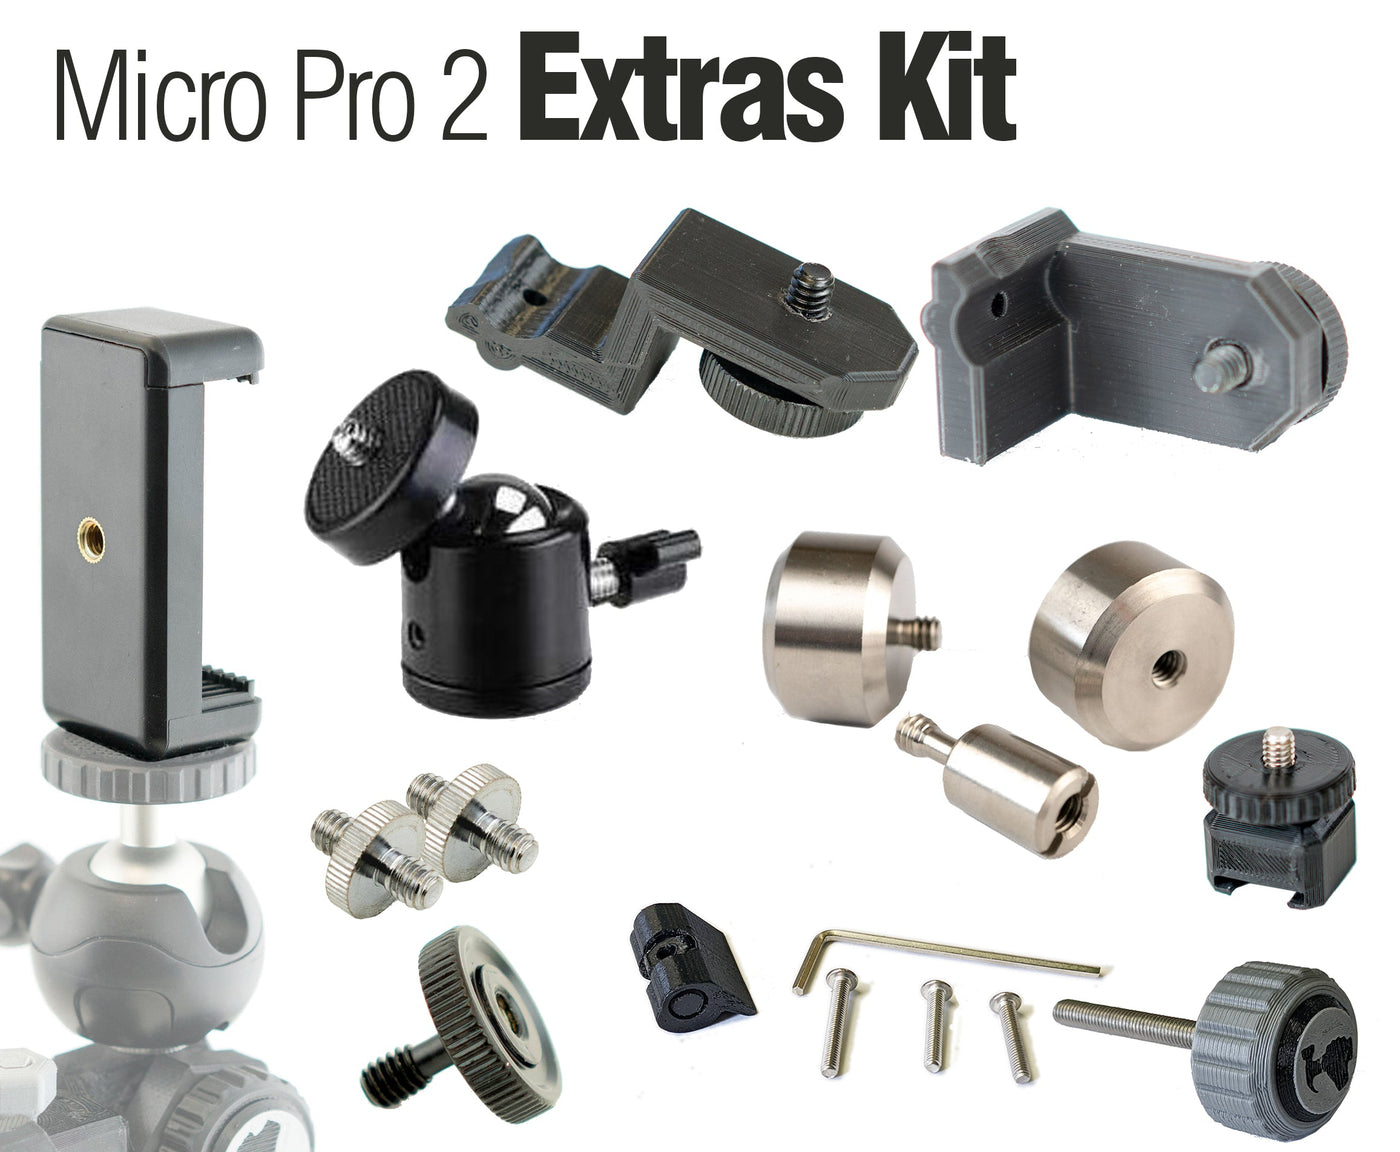 Extras Kit for Micro Pro 2 - US - ScottyMakesStuff